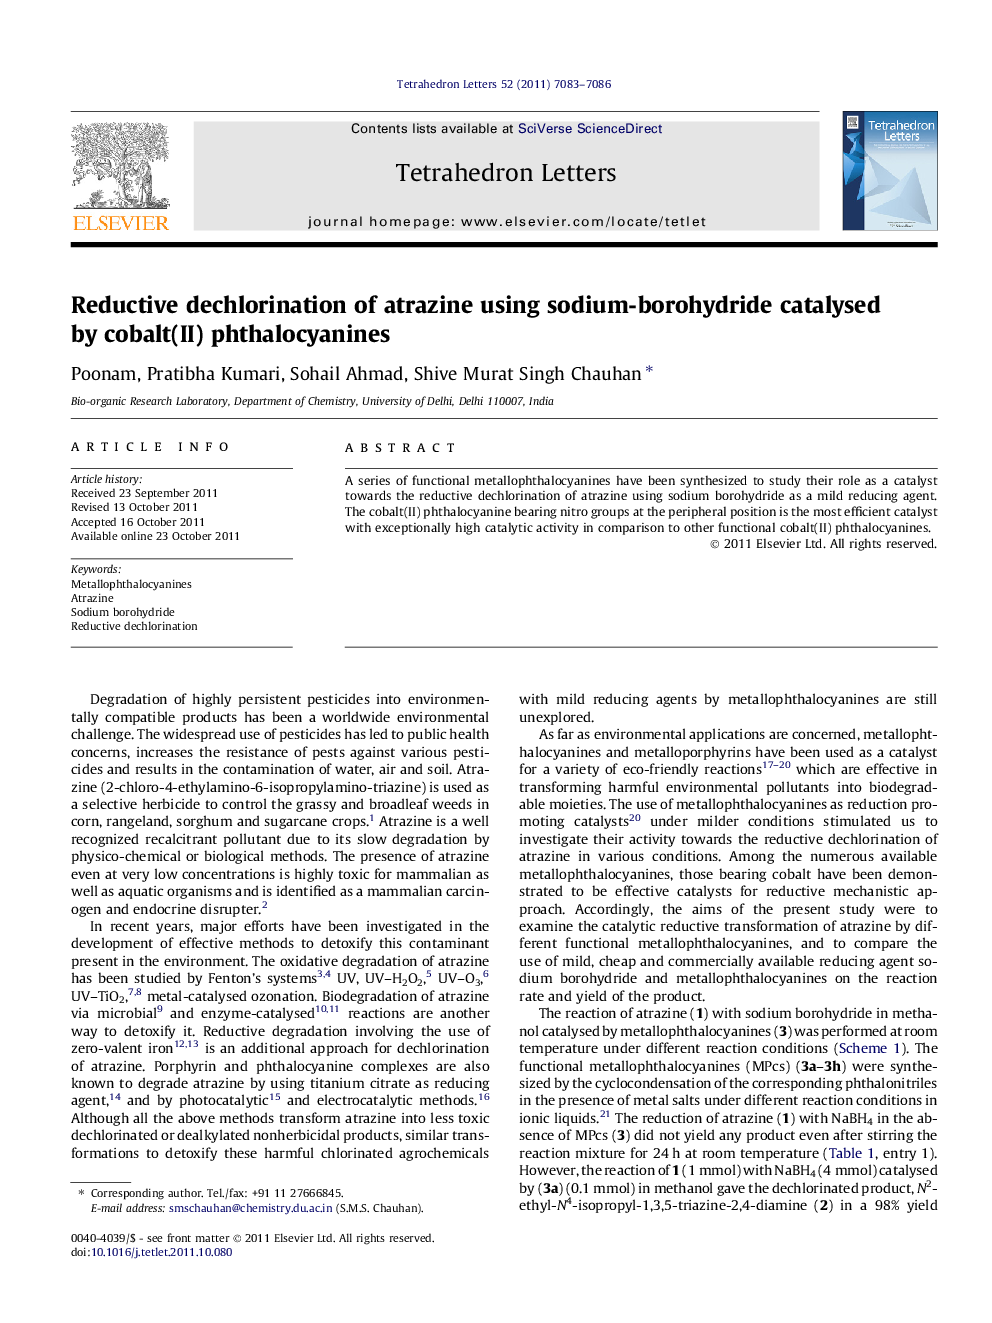 Reductive dechlorination of atrazine using sodium-borohydride catalysed by cobalt(II) phthalocyanines